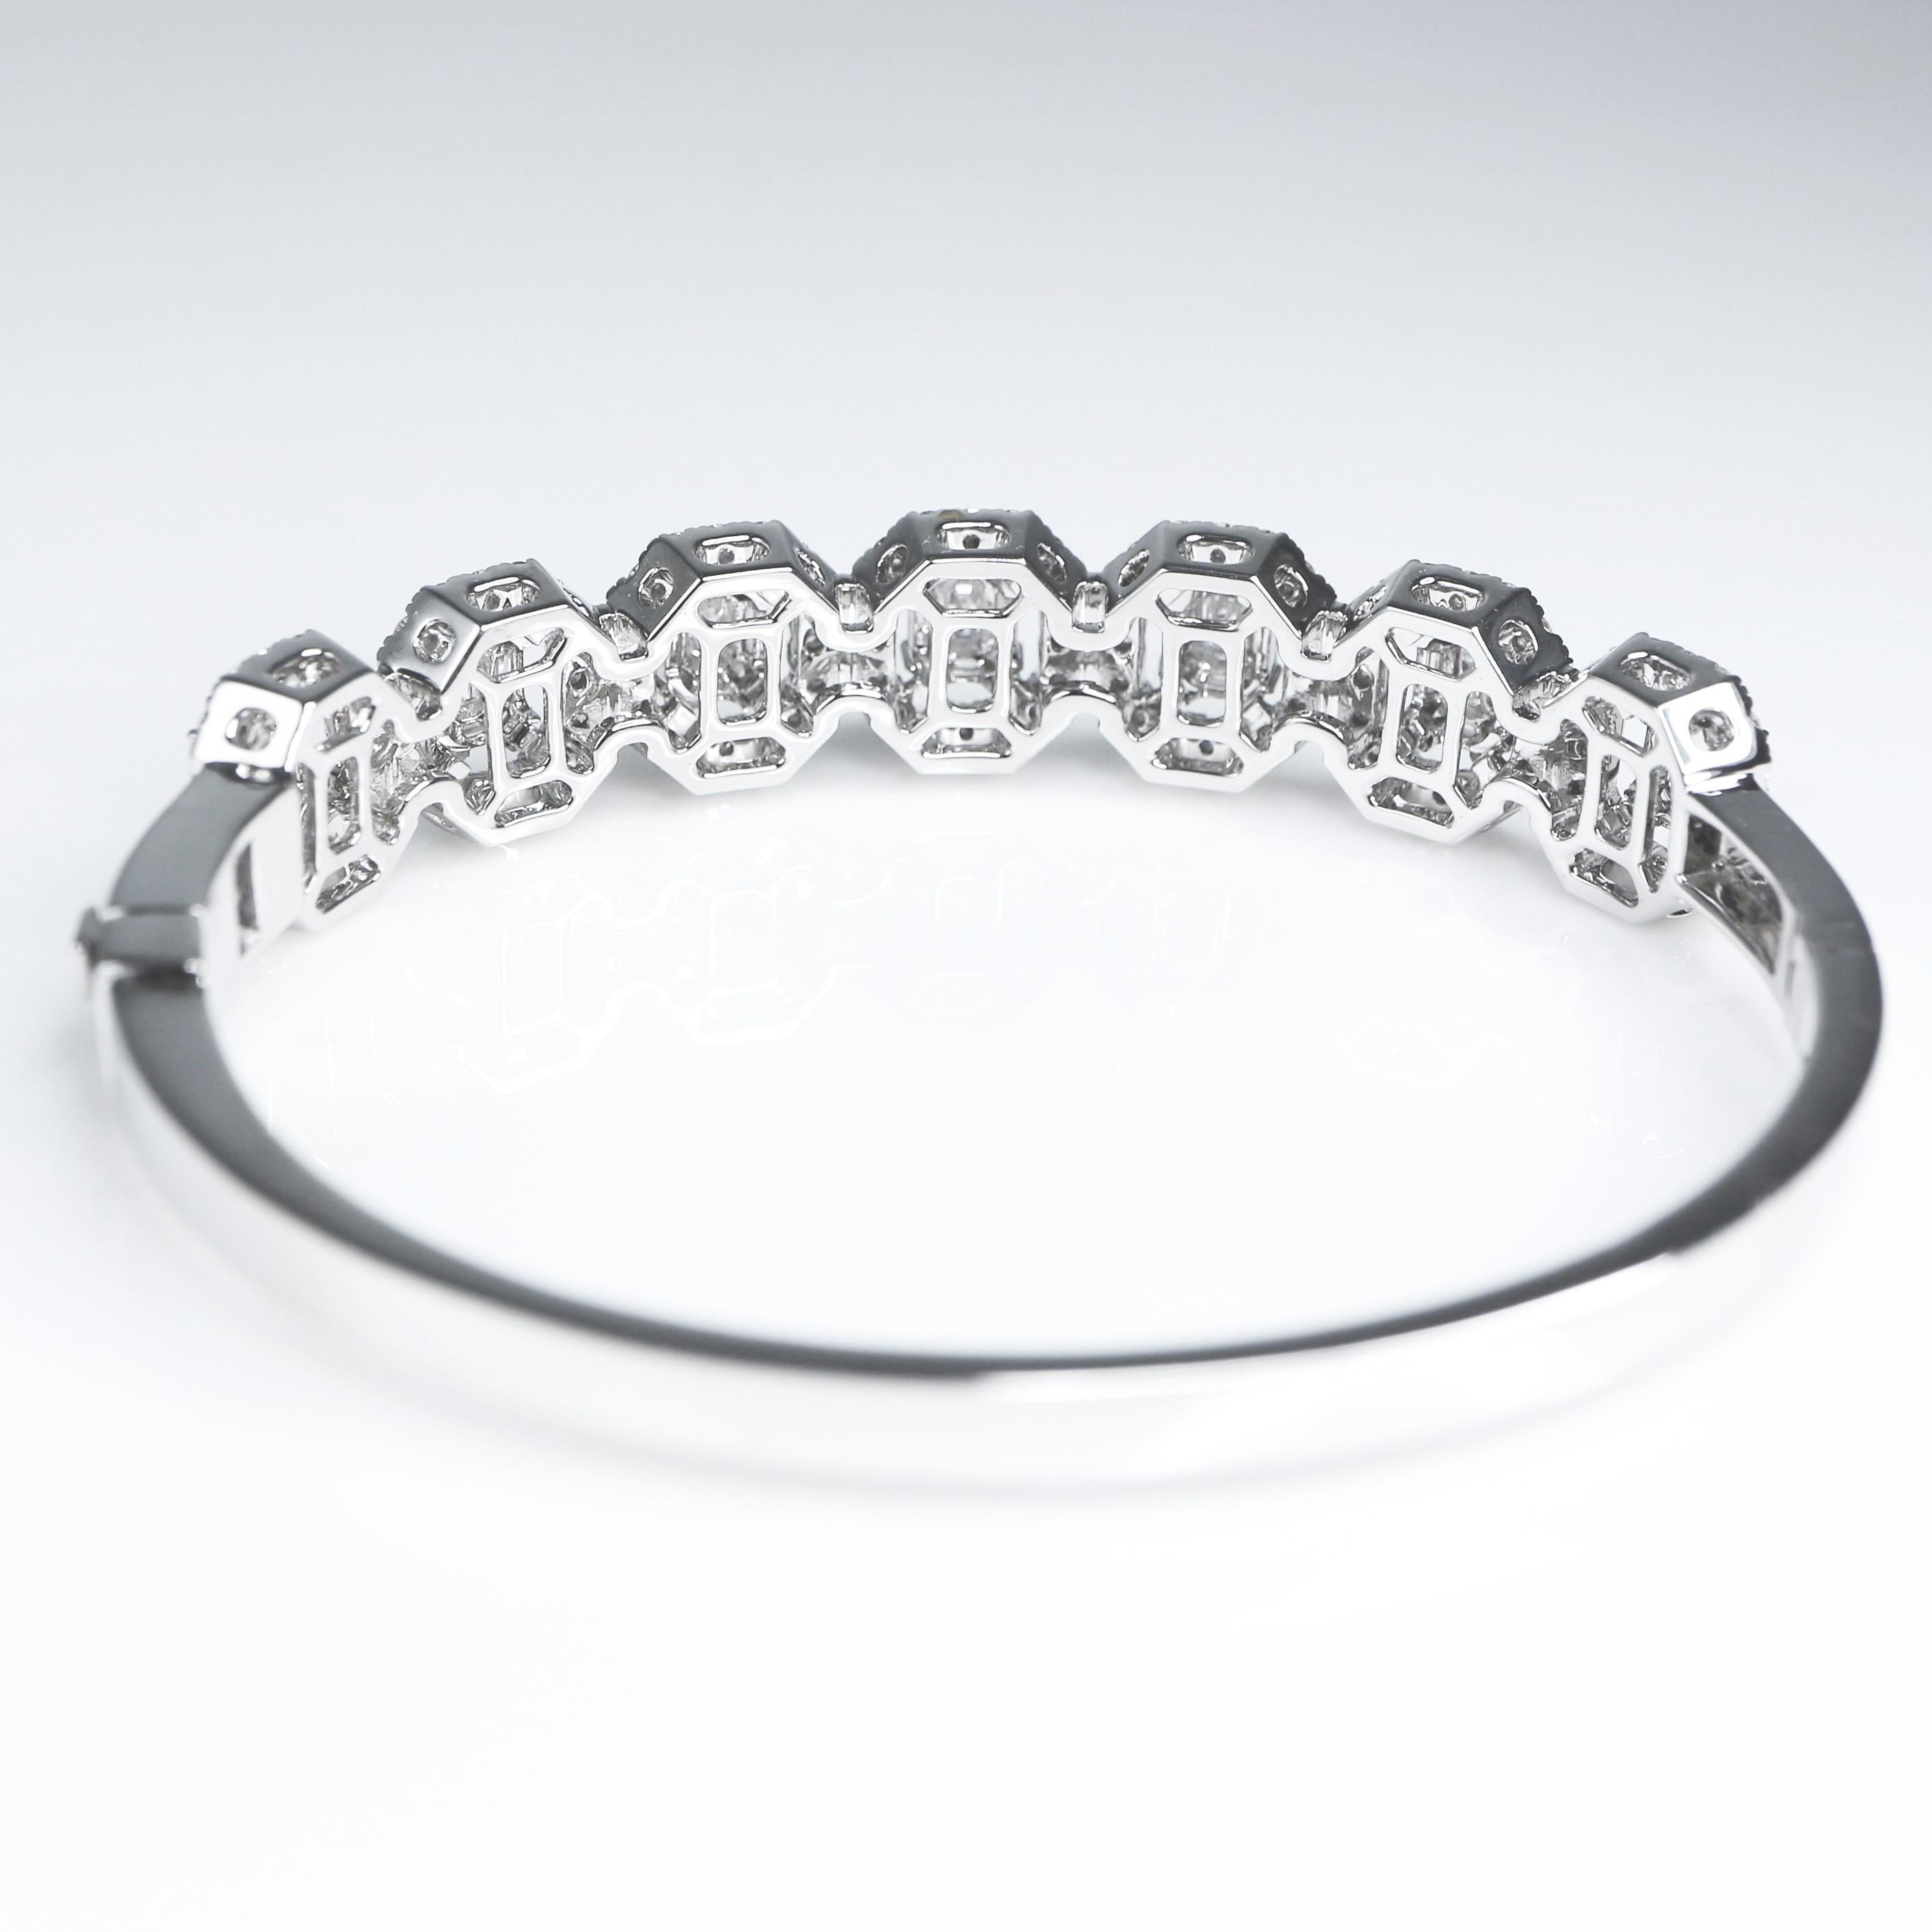 IGI 14k 3.92 Carat Diamond Antique Art Deco Bangle Bracelet For Sale 2